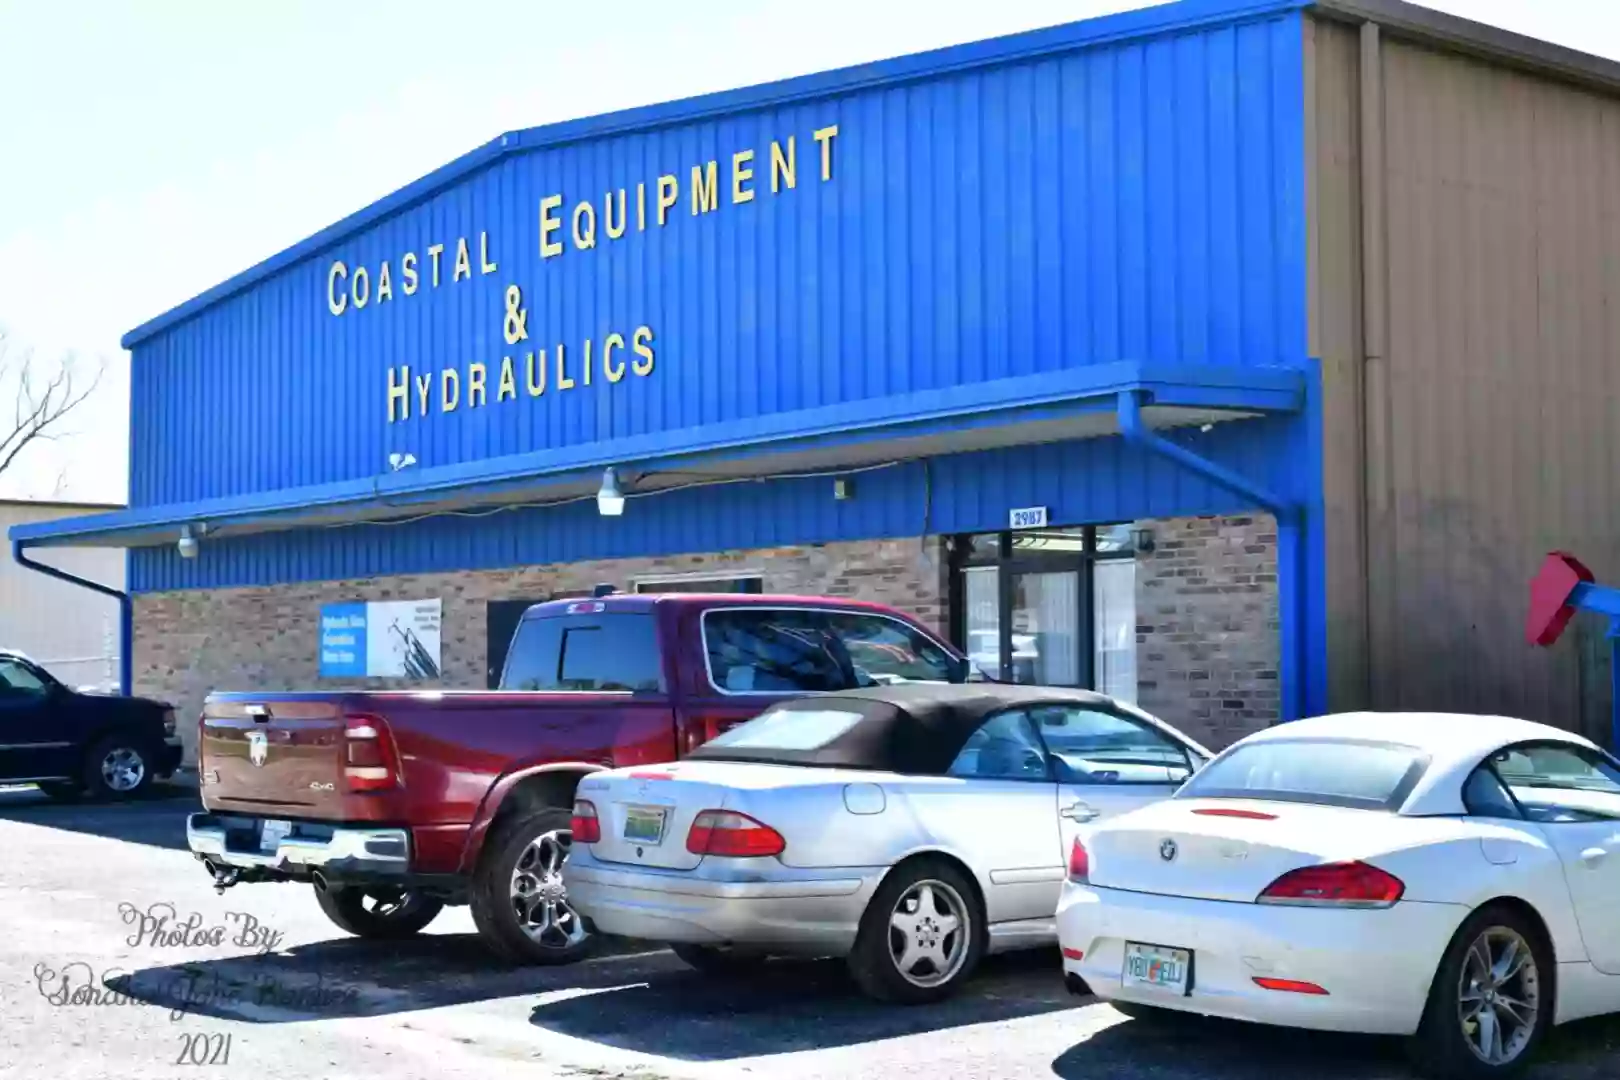 Coastal Equipment & Hydraulics